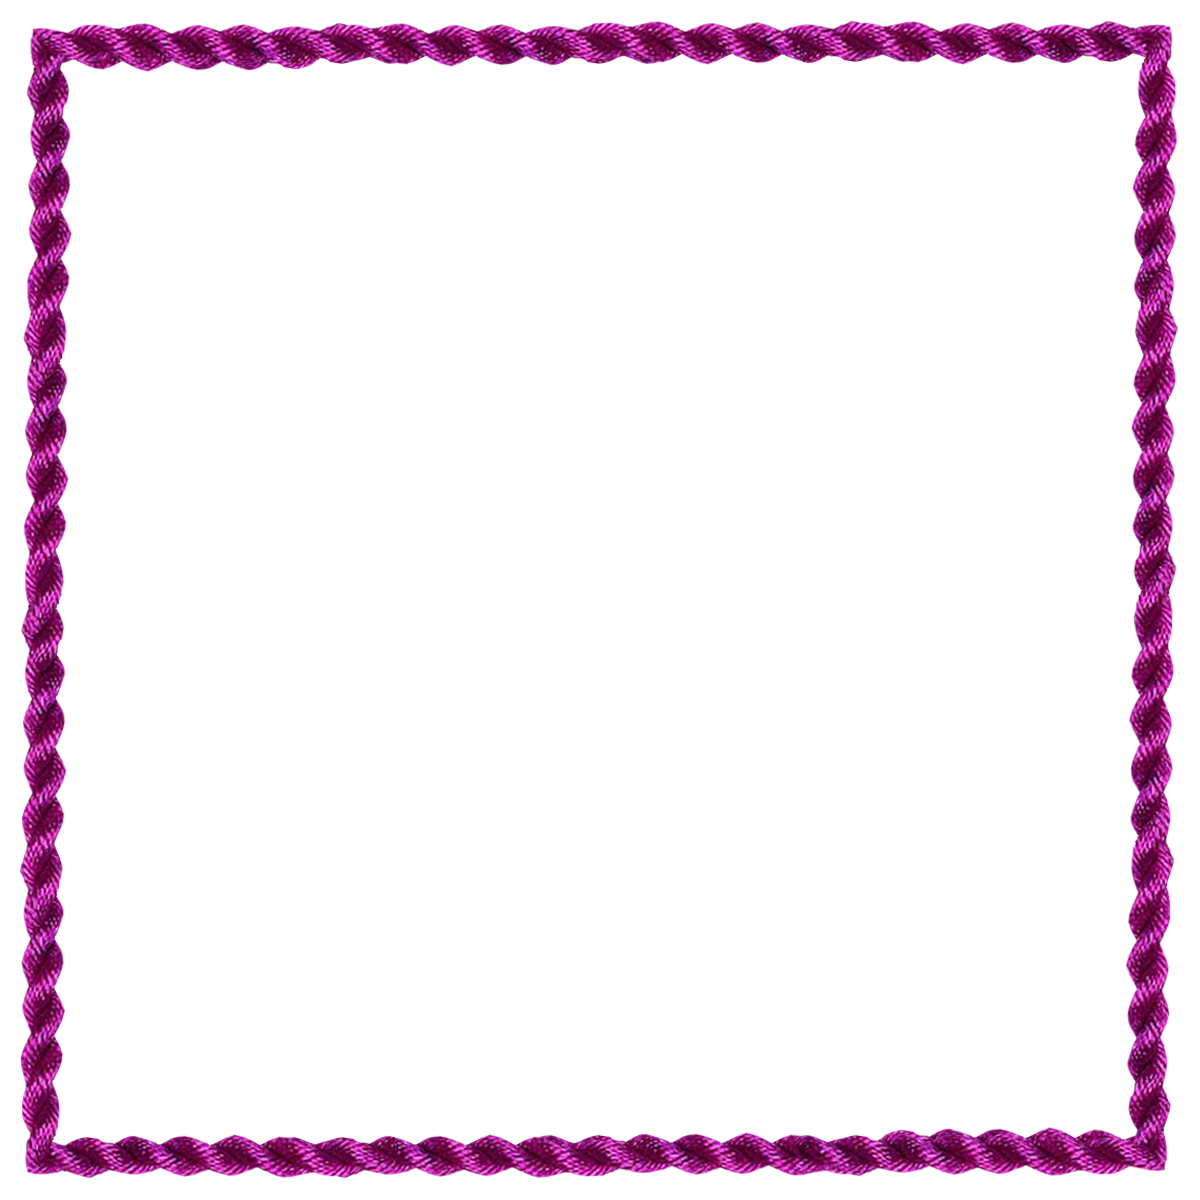 Download PNG image - Fuchsia Border Frame Transparent PNG 